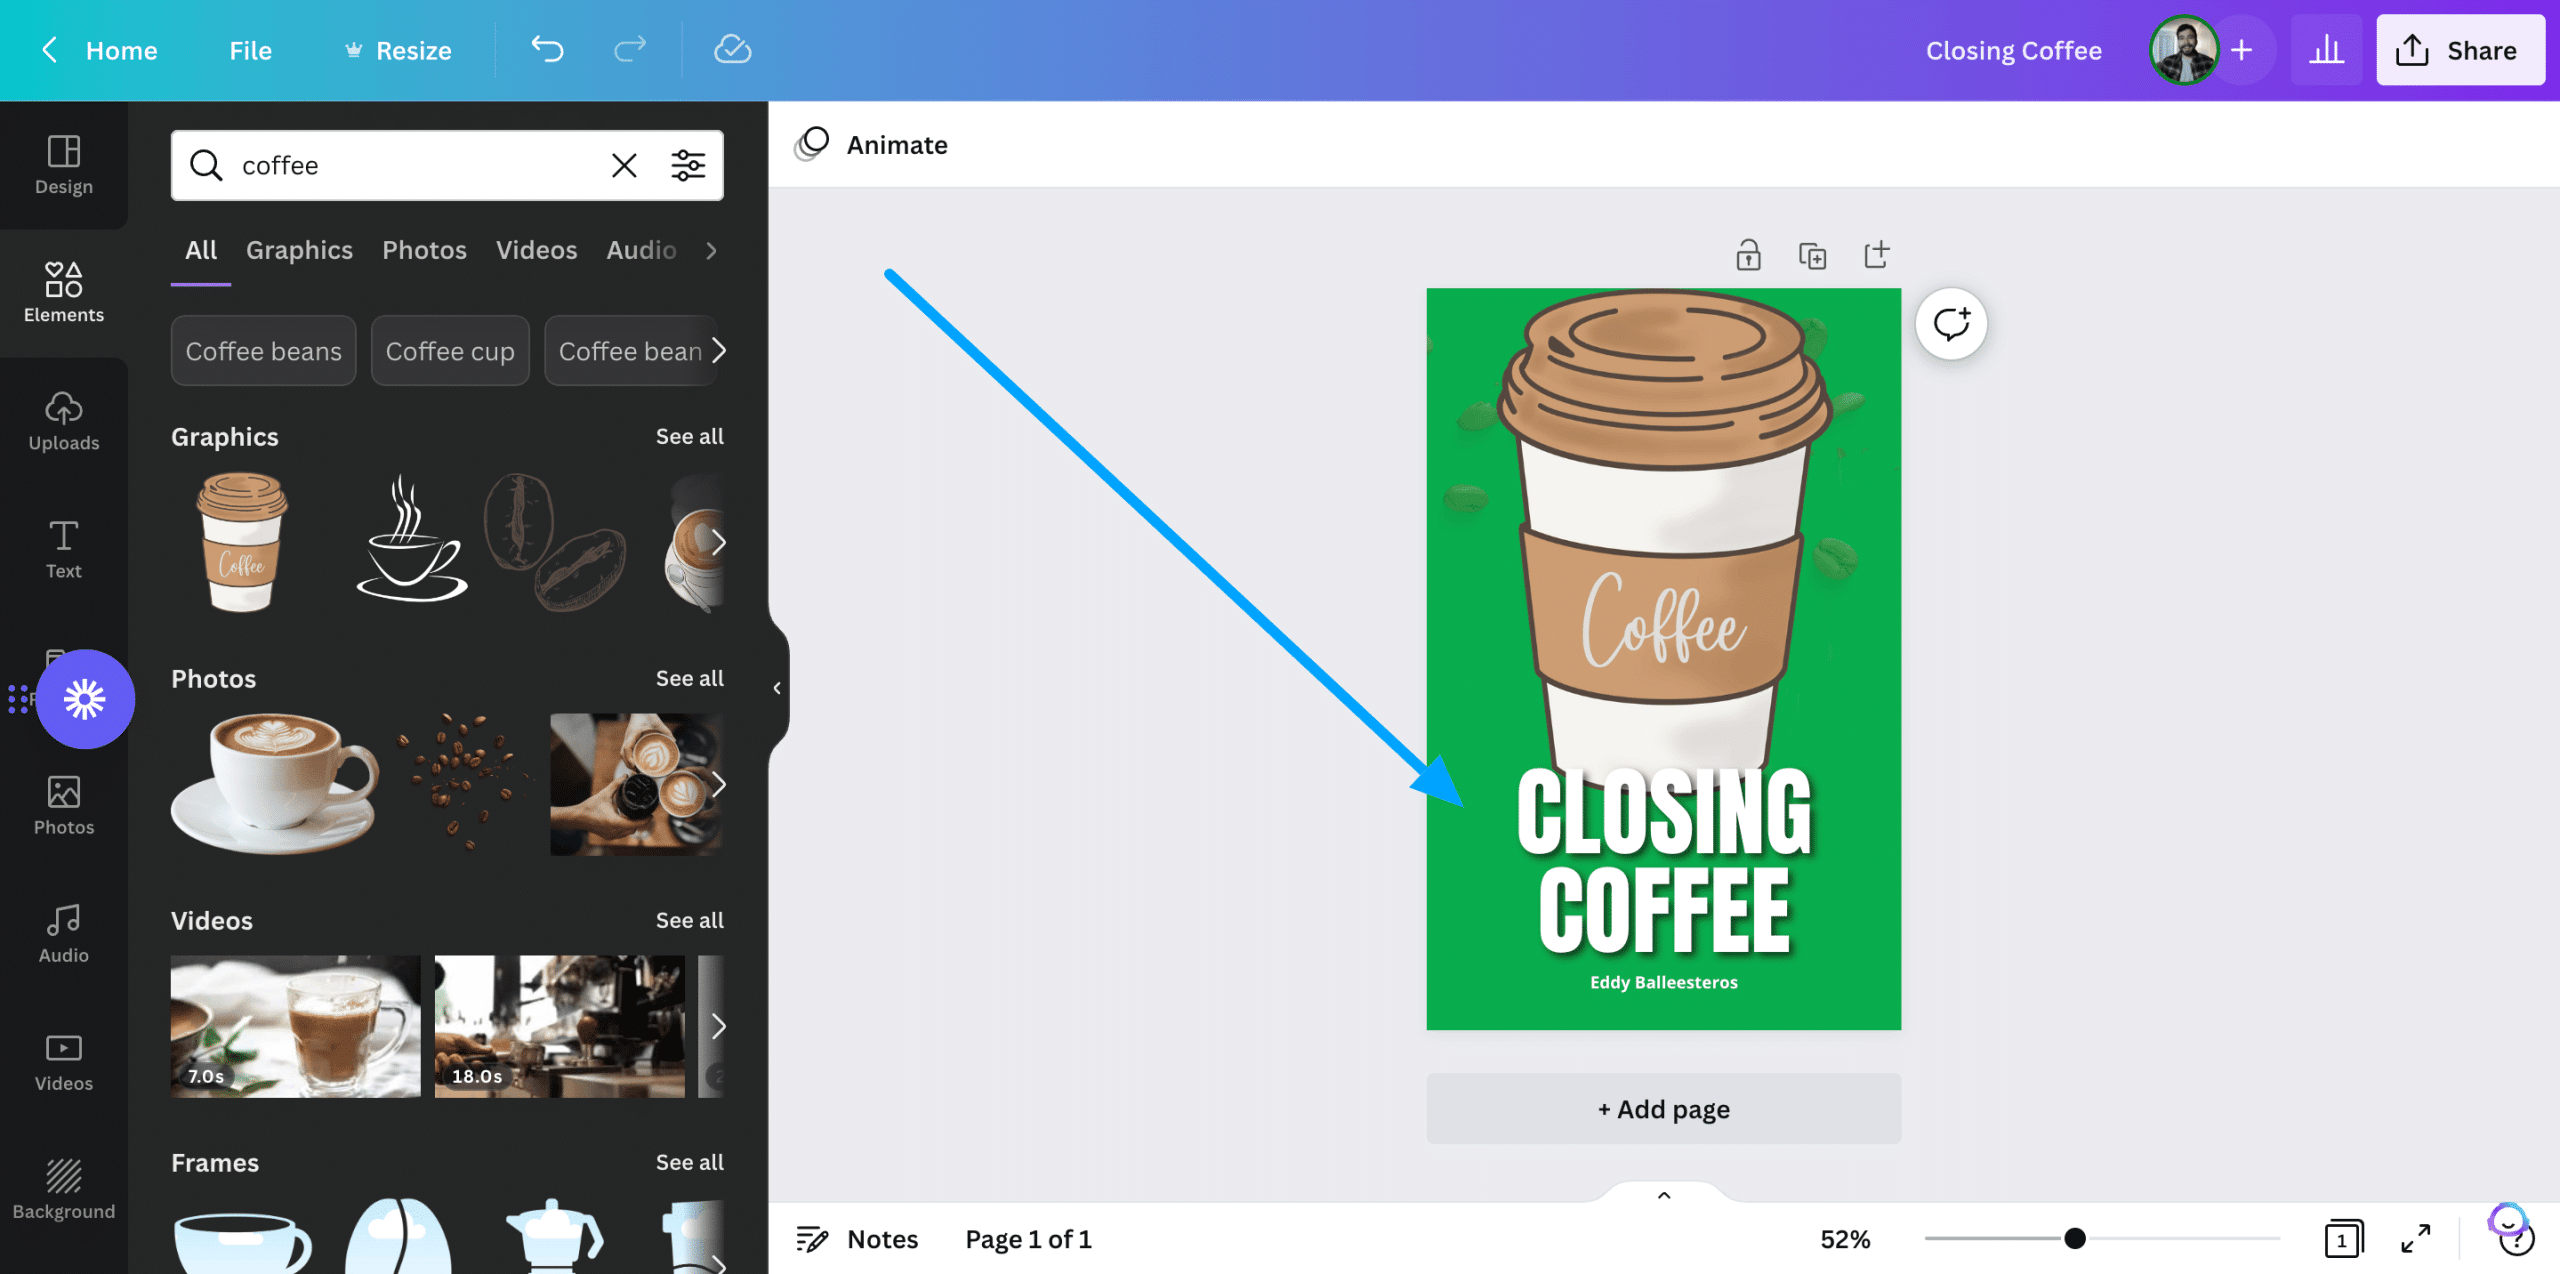 Closing coffee ebook story